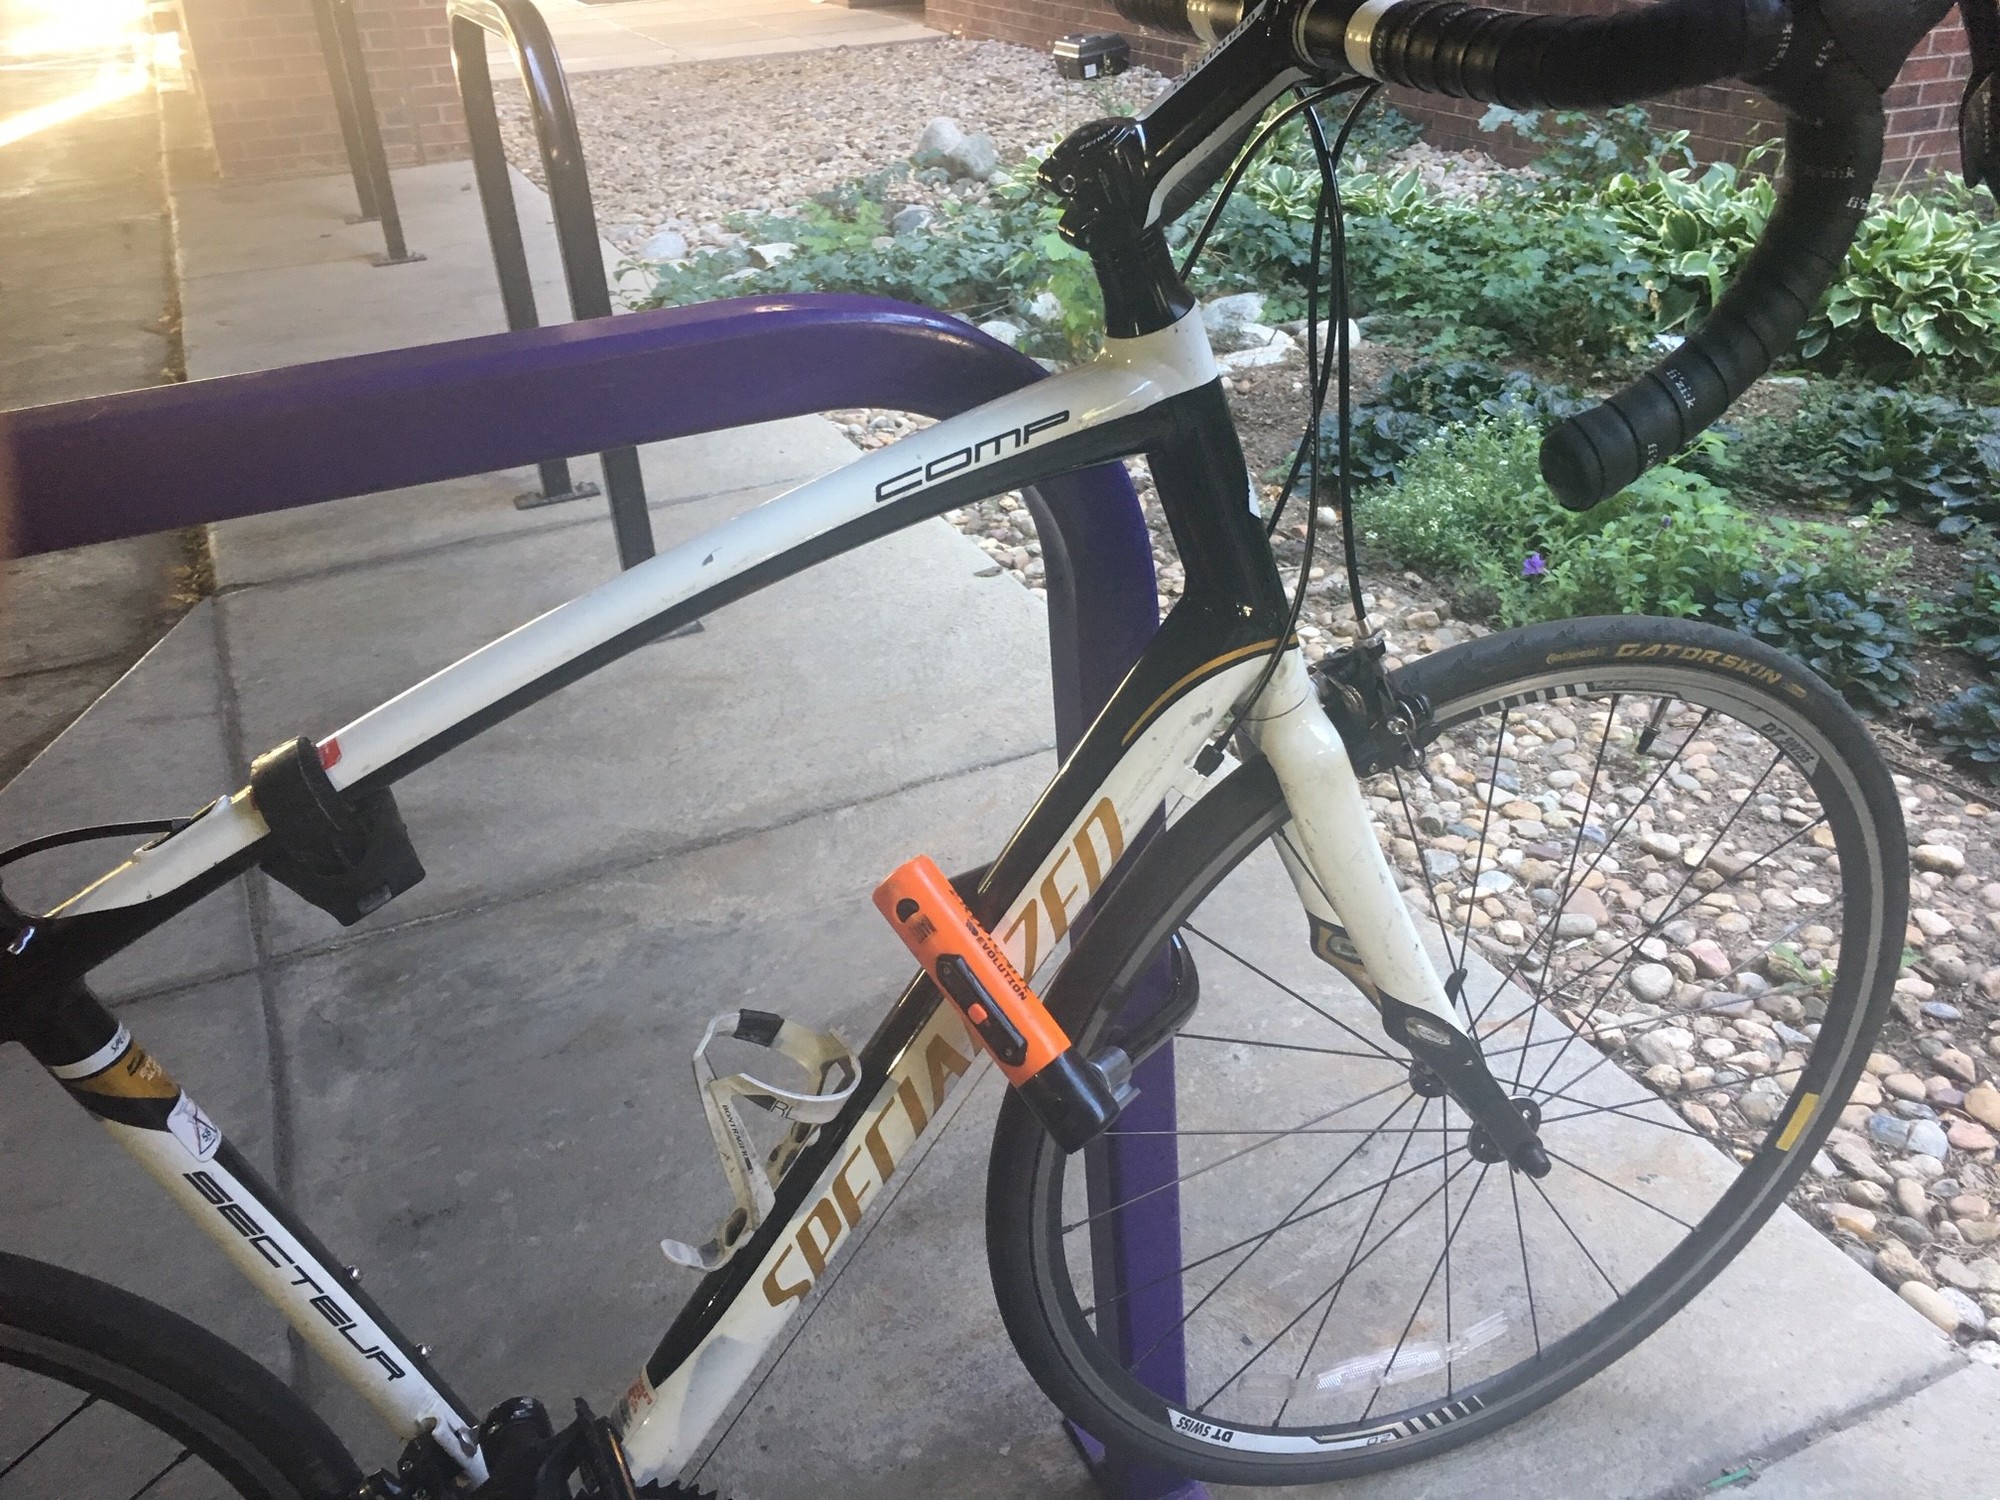 Bike properly locked to rack with U-Lock